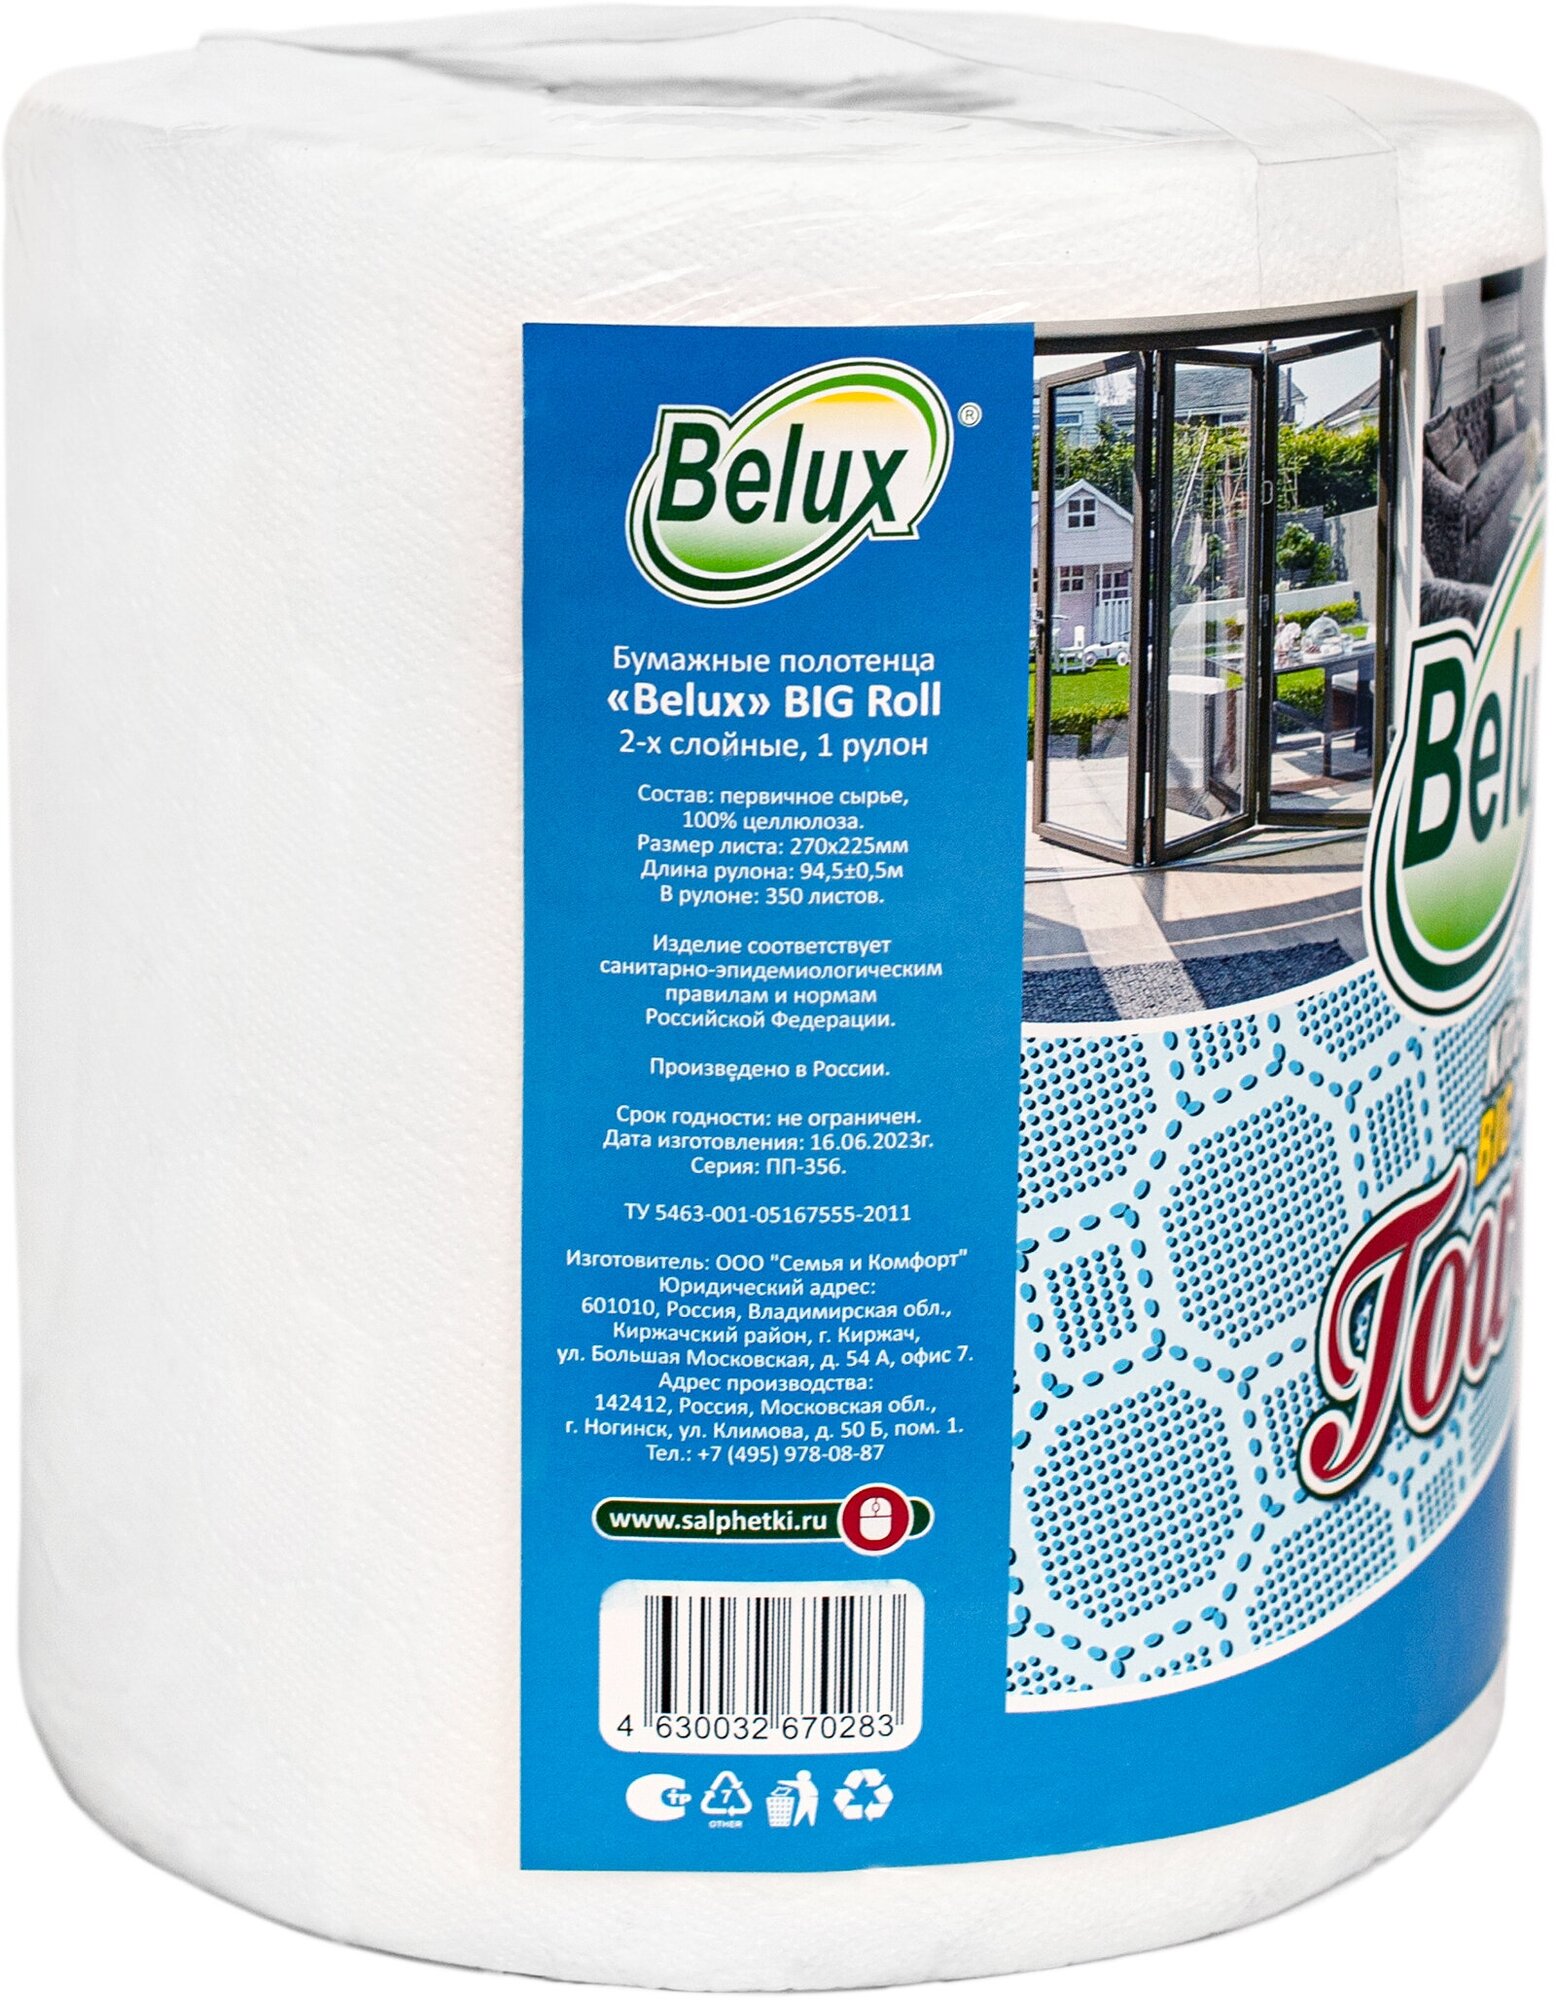 Бумажные полотенца Belux Big Roll 2 слоя 1 рулон 94.5м Семья и Комфорт - фото №2